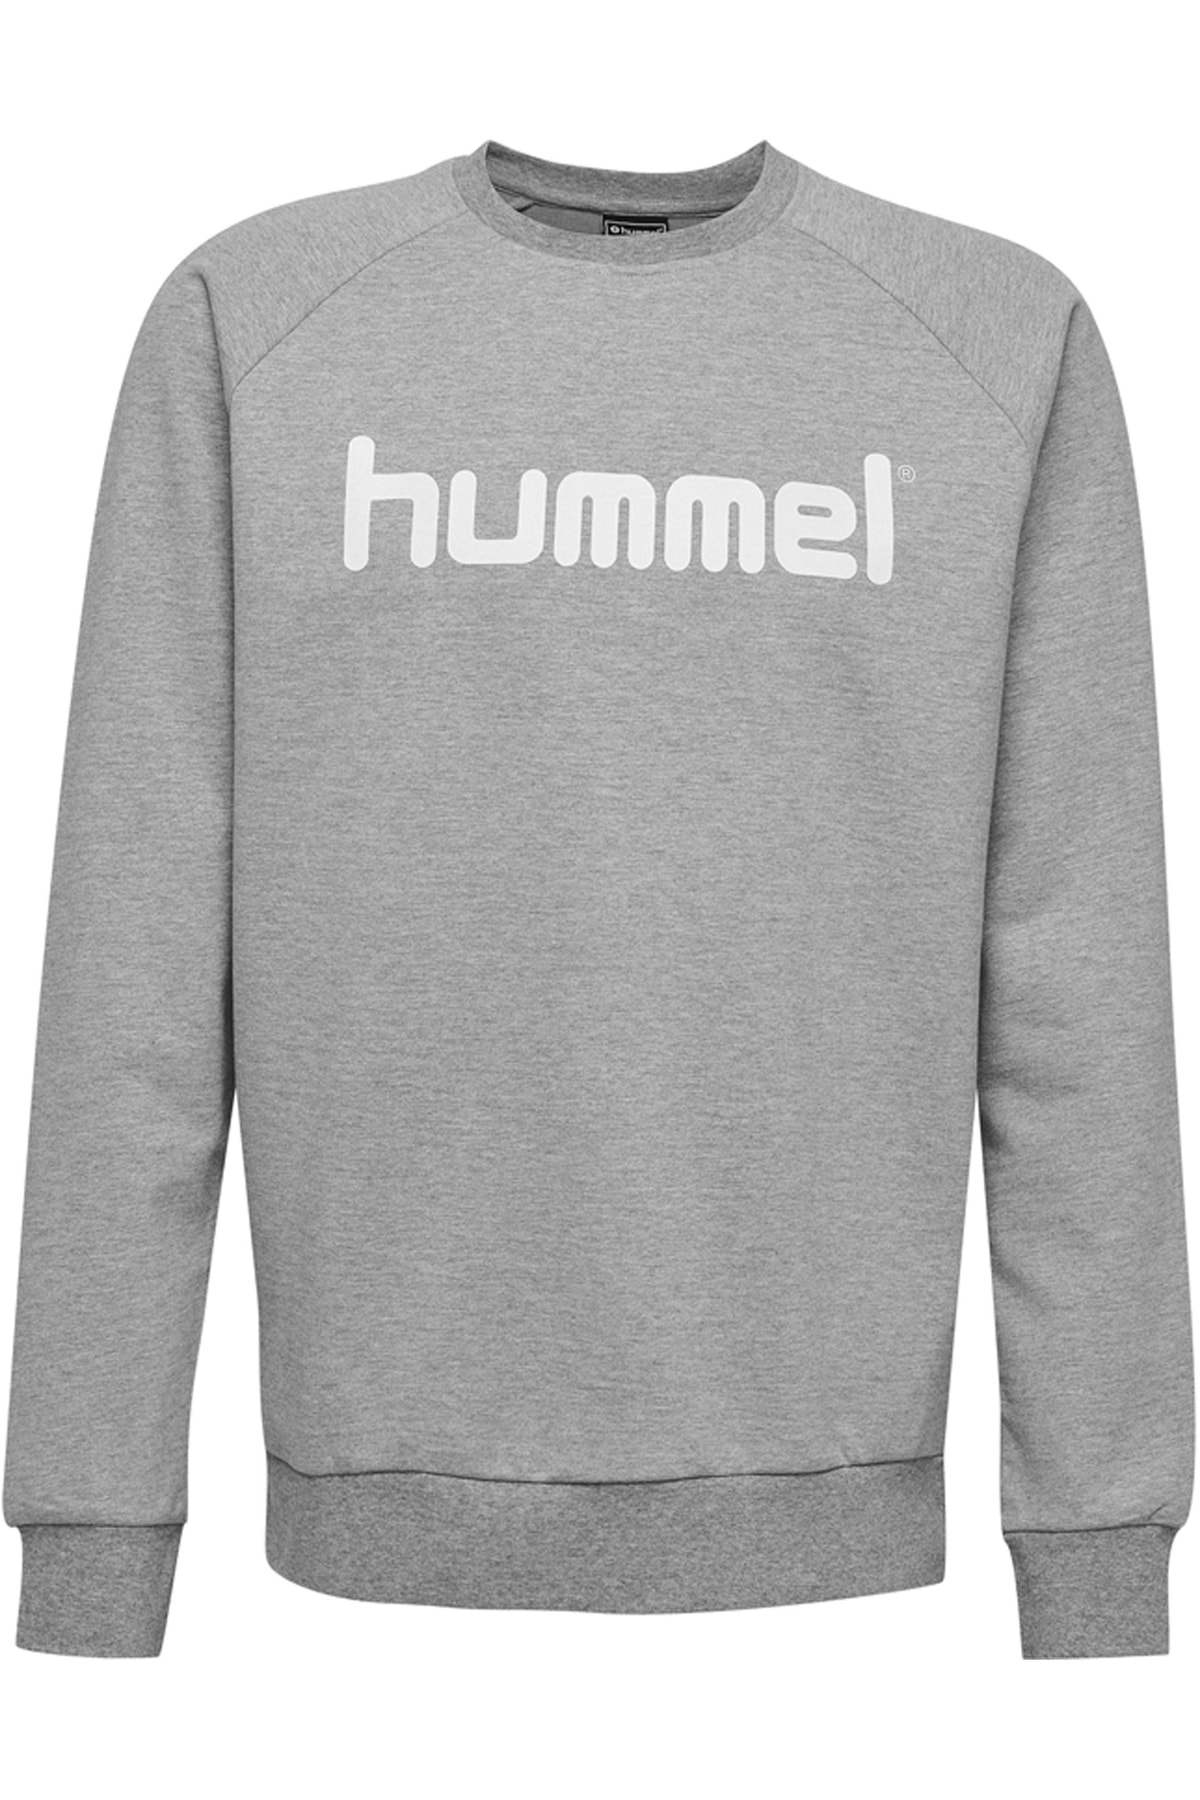 HUMMEL Sweatshirt Grau Regular Fit